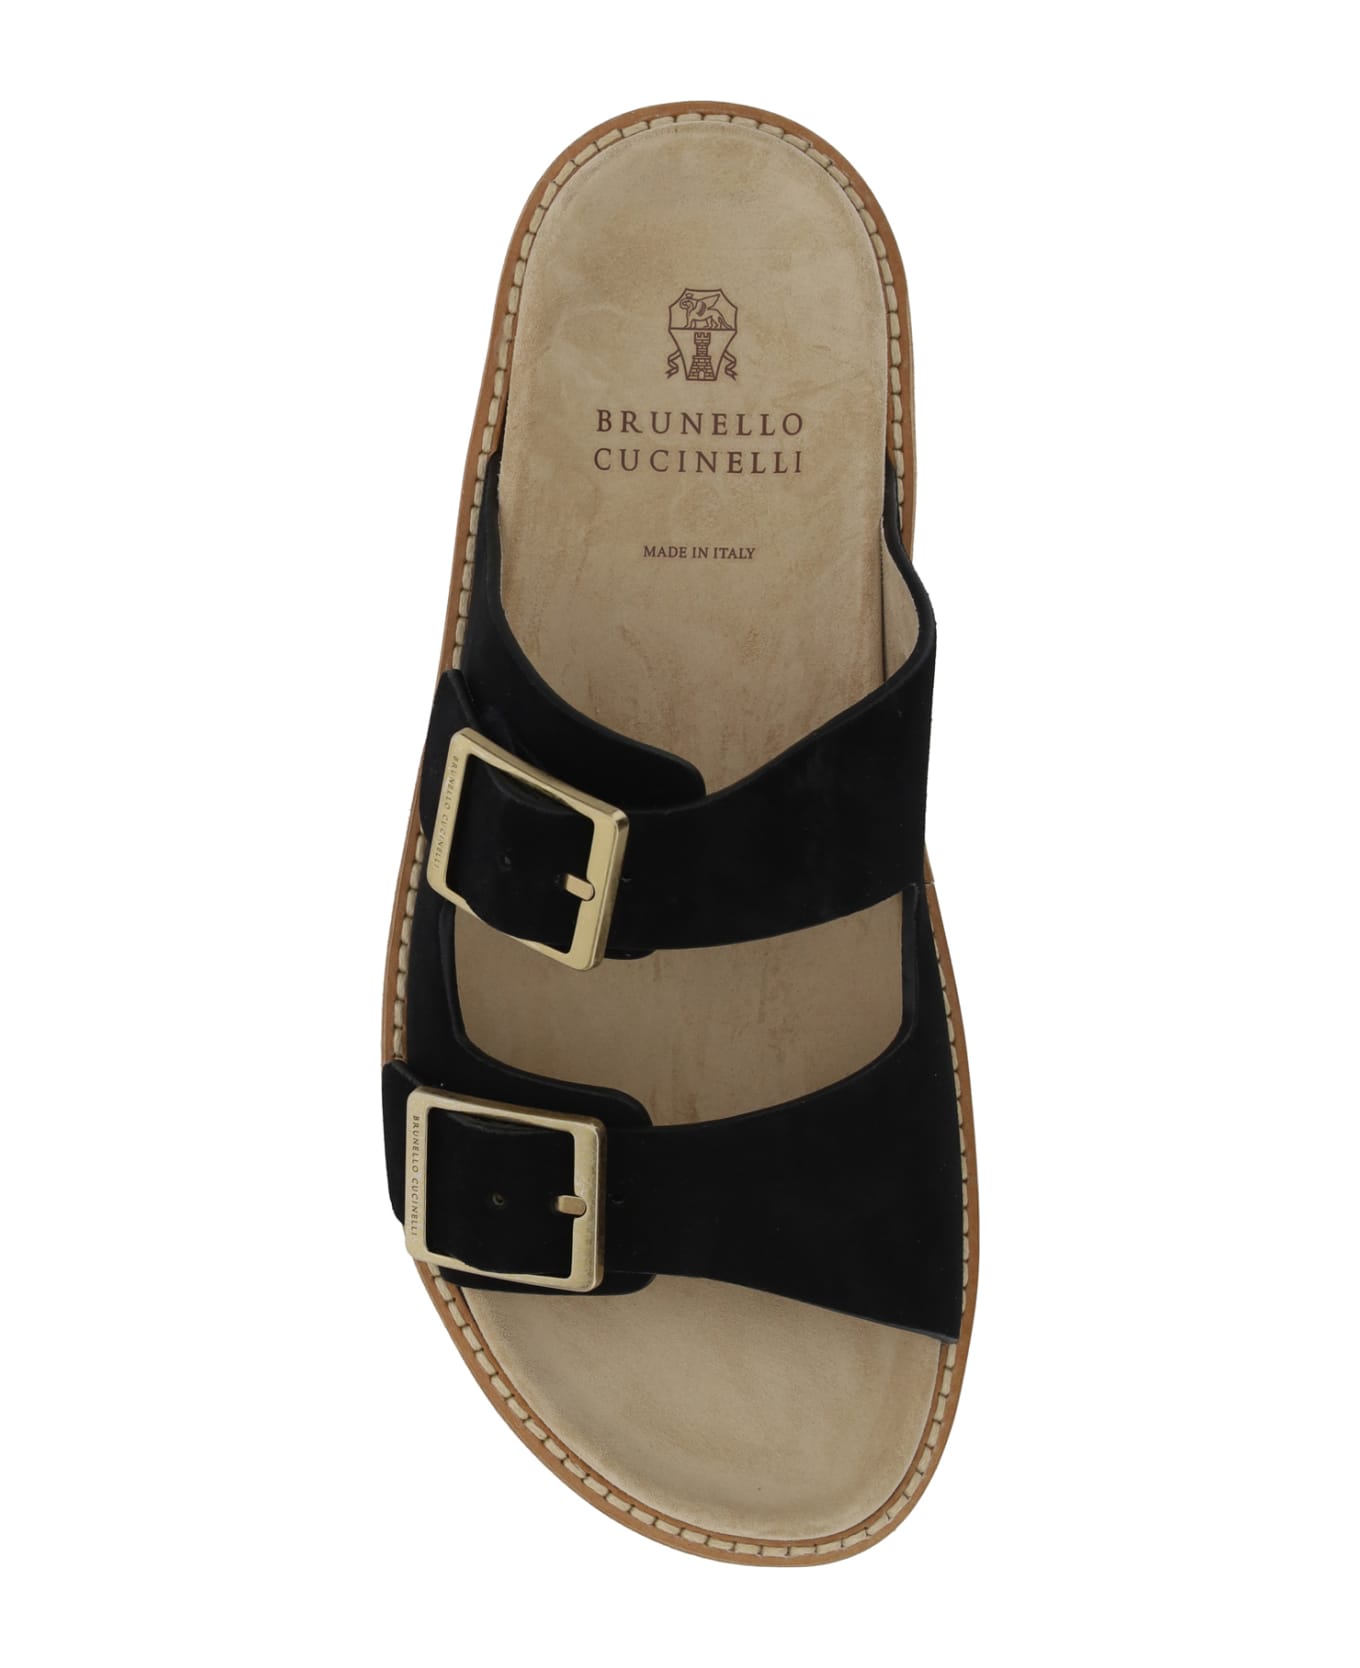 Brunello Cucinelli Sandals - Nero+camel その他各種シューズ